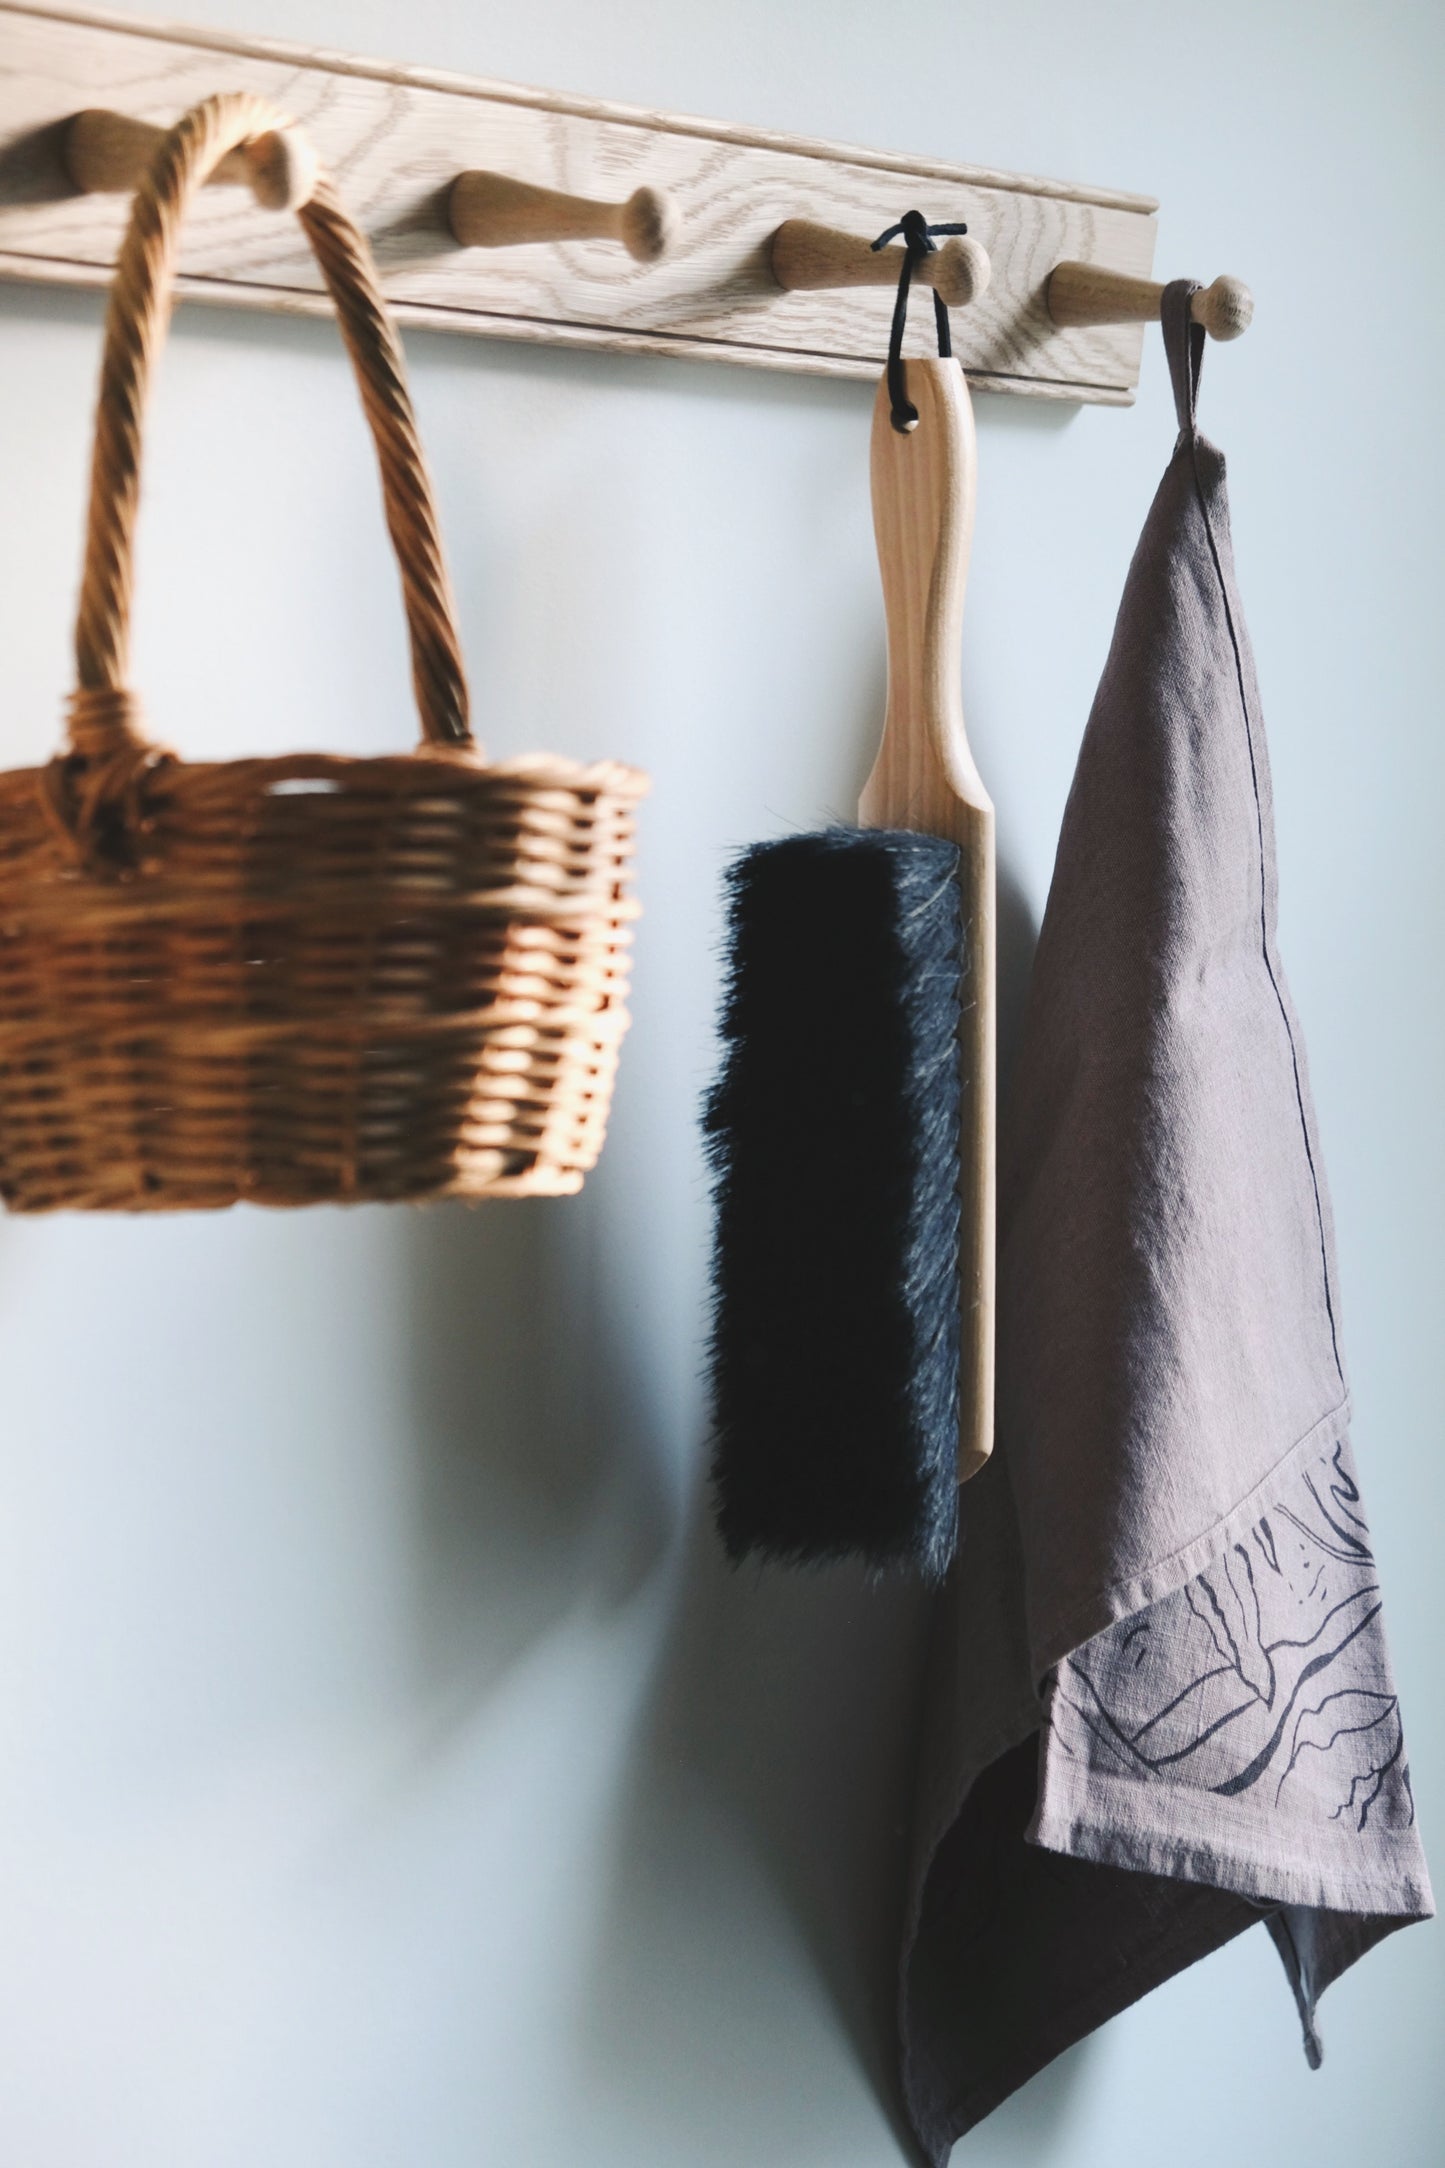 Brush, basket, and tea towel hanging on a peg rail. 